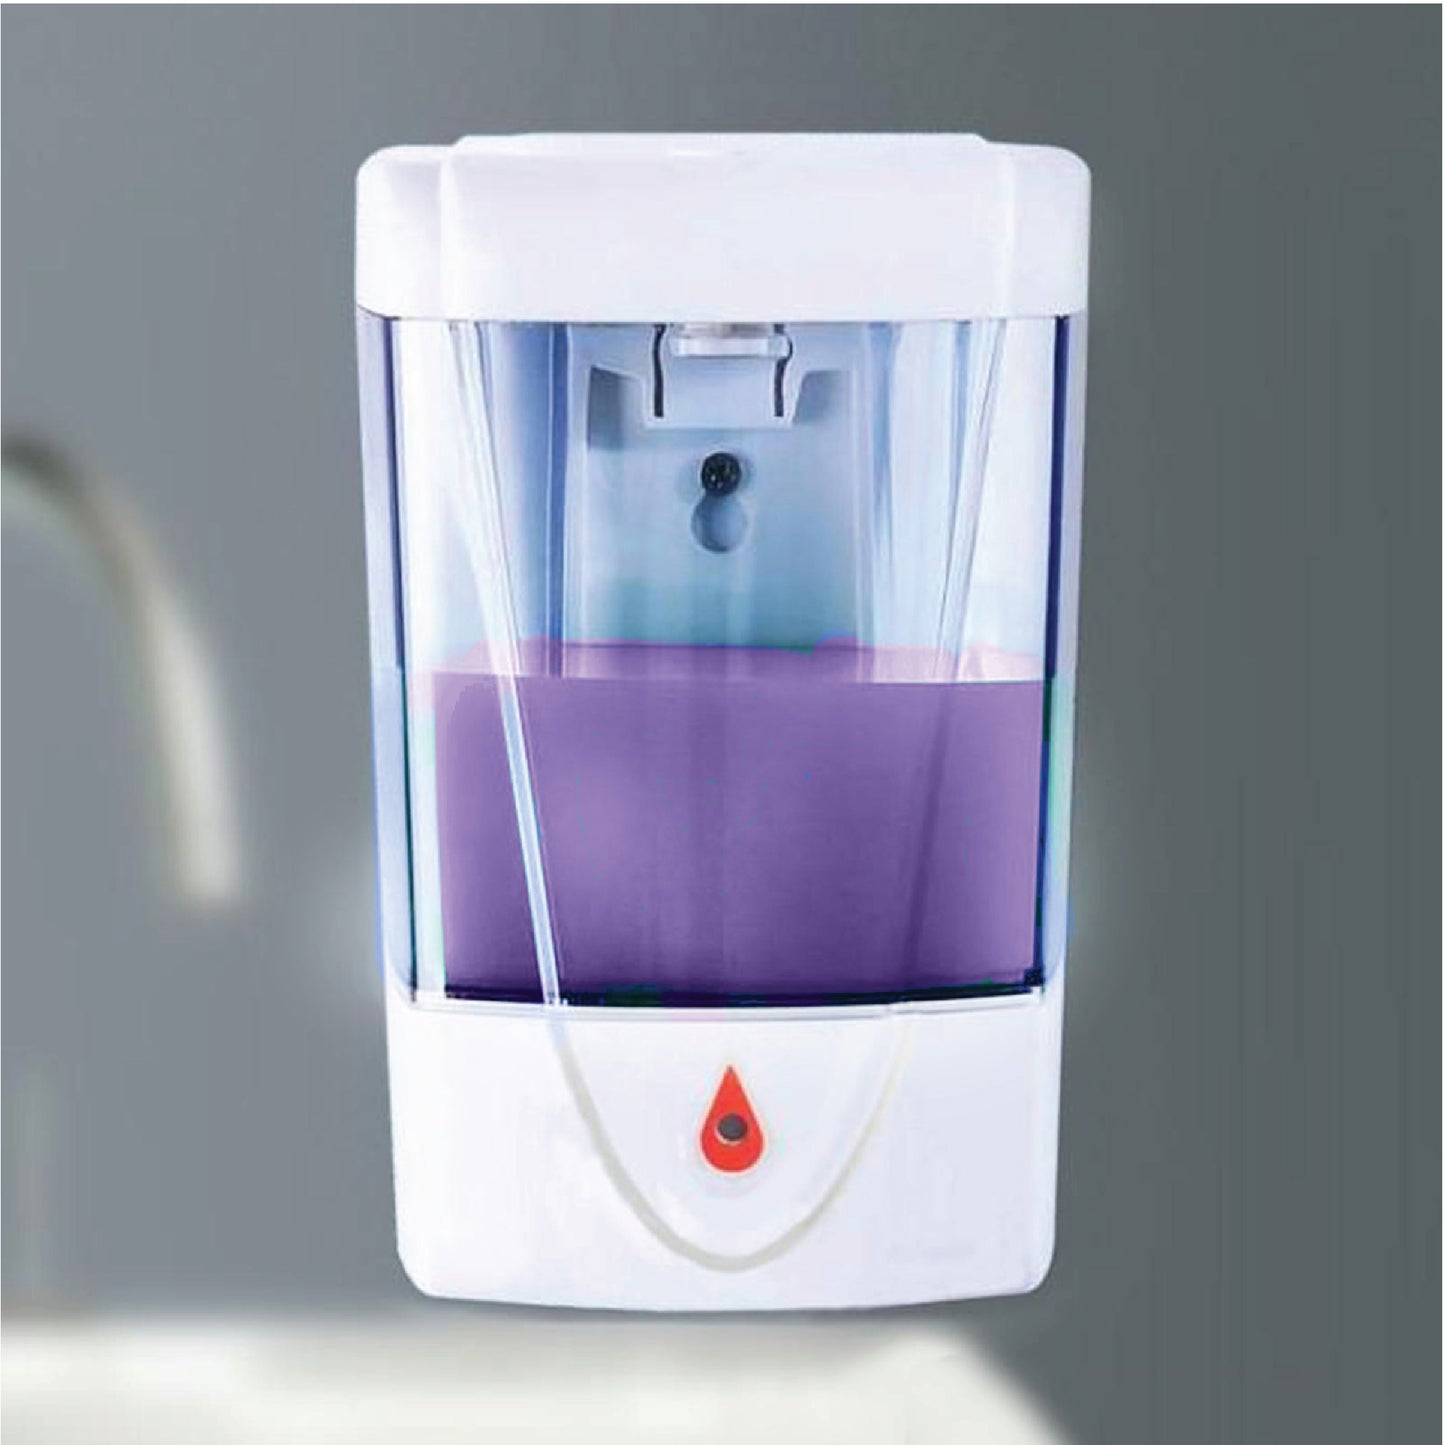 Mcoco Automatic Soap Dispenser (Hand Sanitizer) 700ml Sensor Type - K-3007DRIP